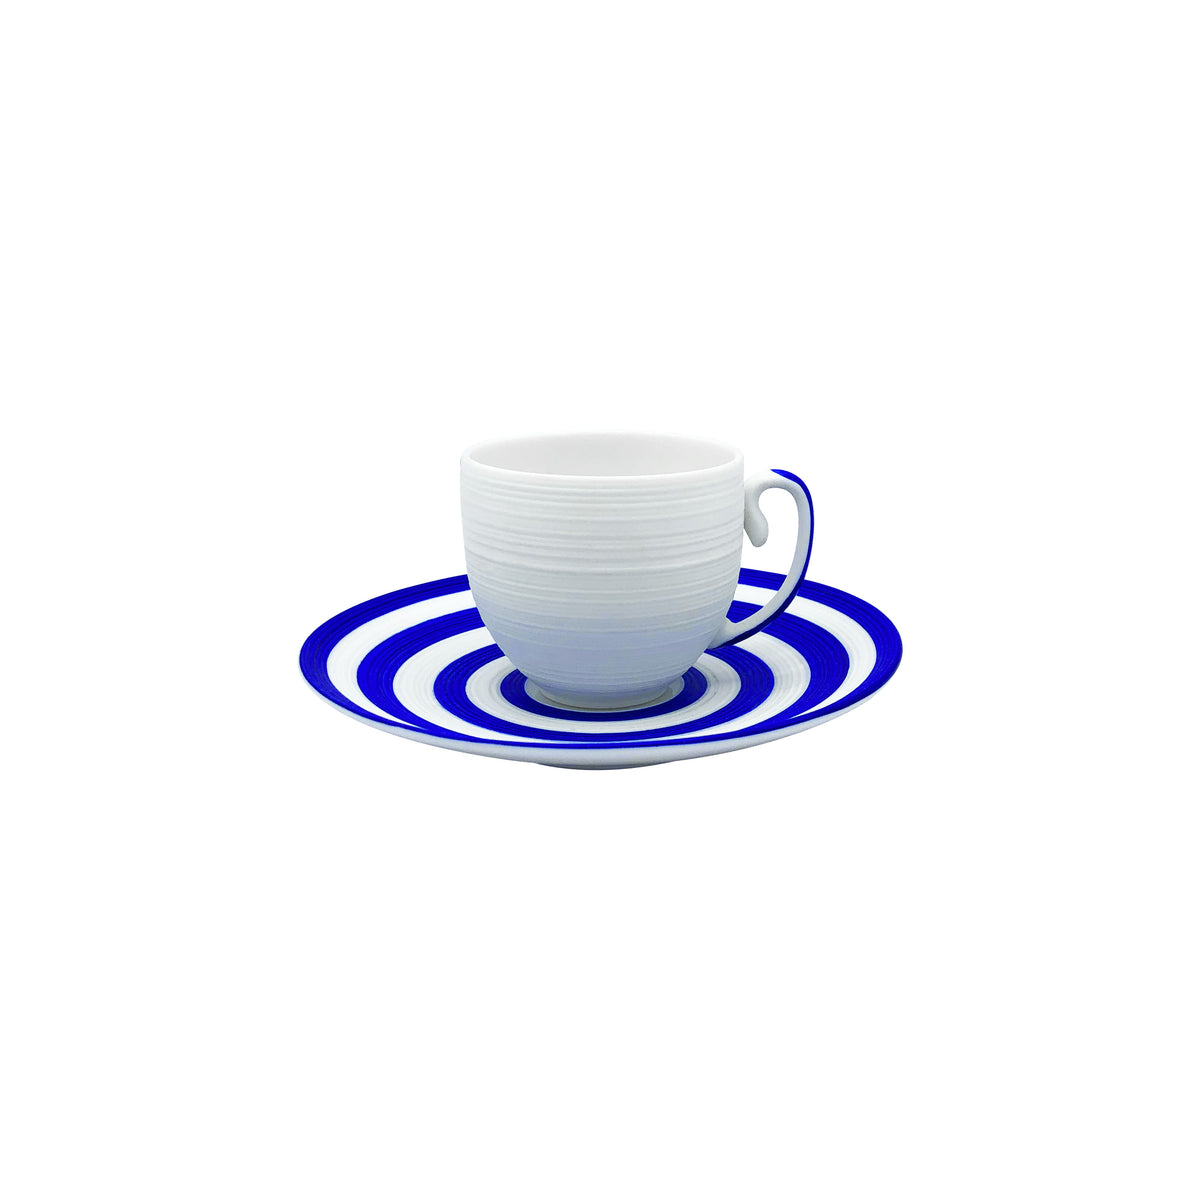 HEMISPHERE Striped Royal Blue - Coffee set (cup & saucer)